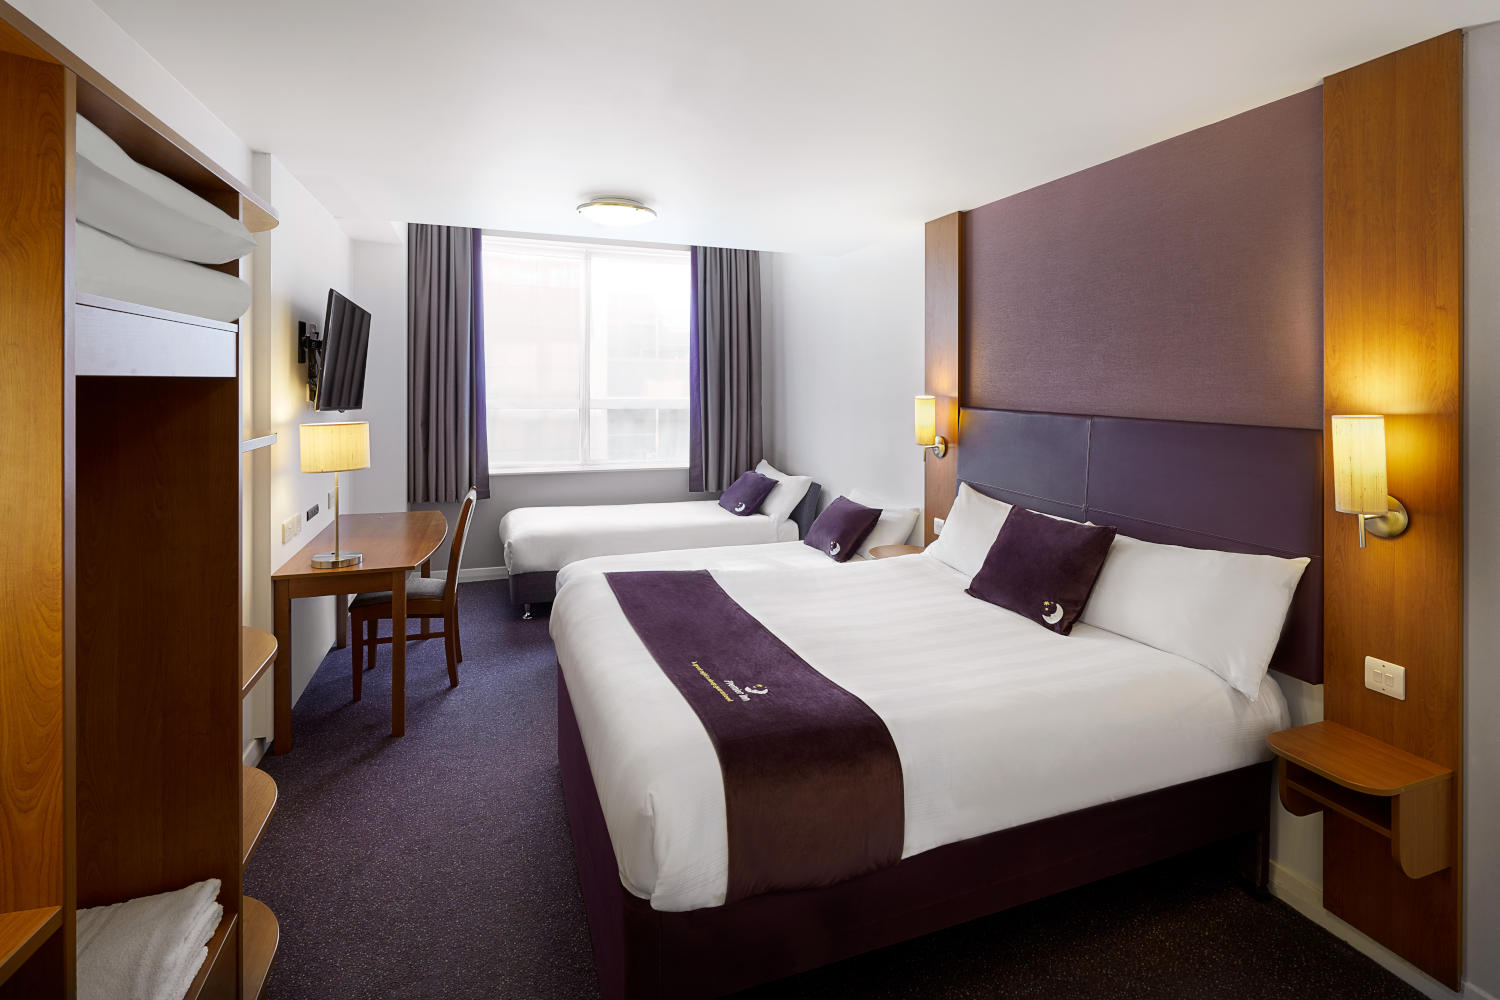 Premier Inn bedroom Premier Inn Paignton South (Brixham Road) hotel Paignton 03333 219248